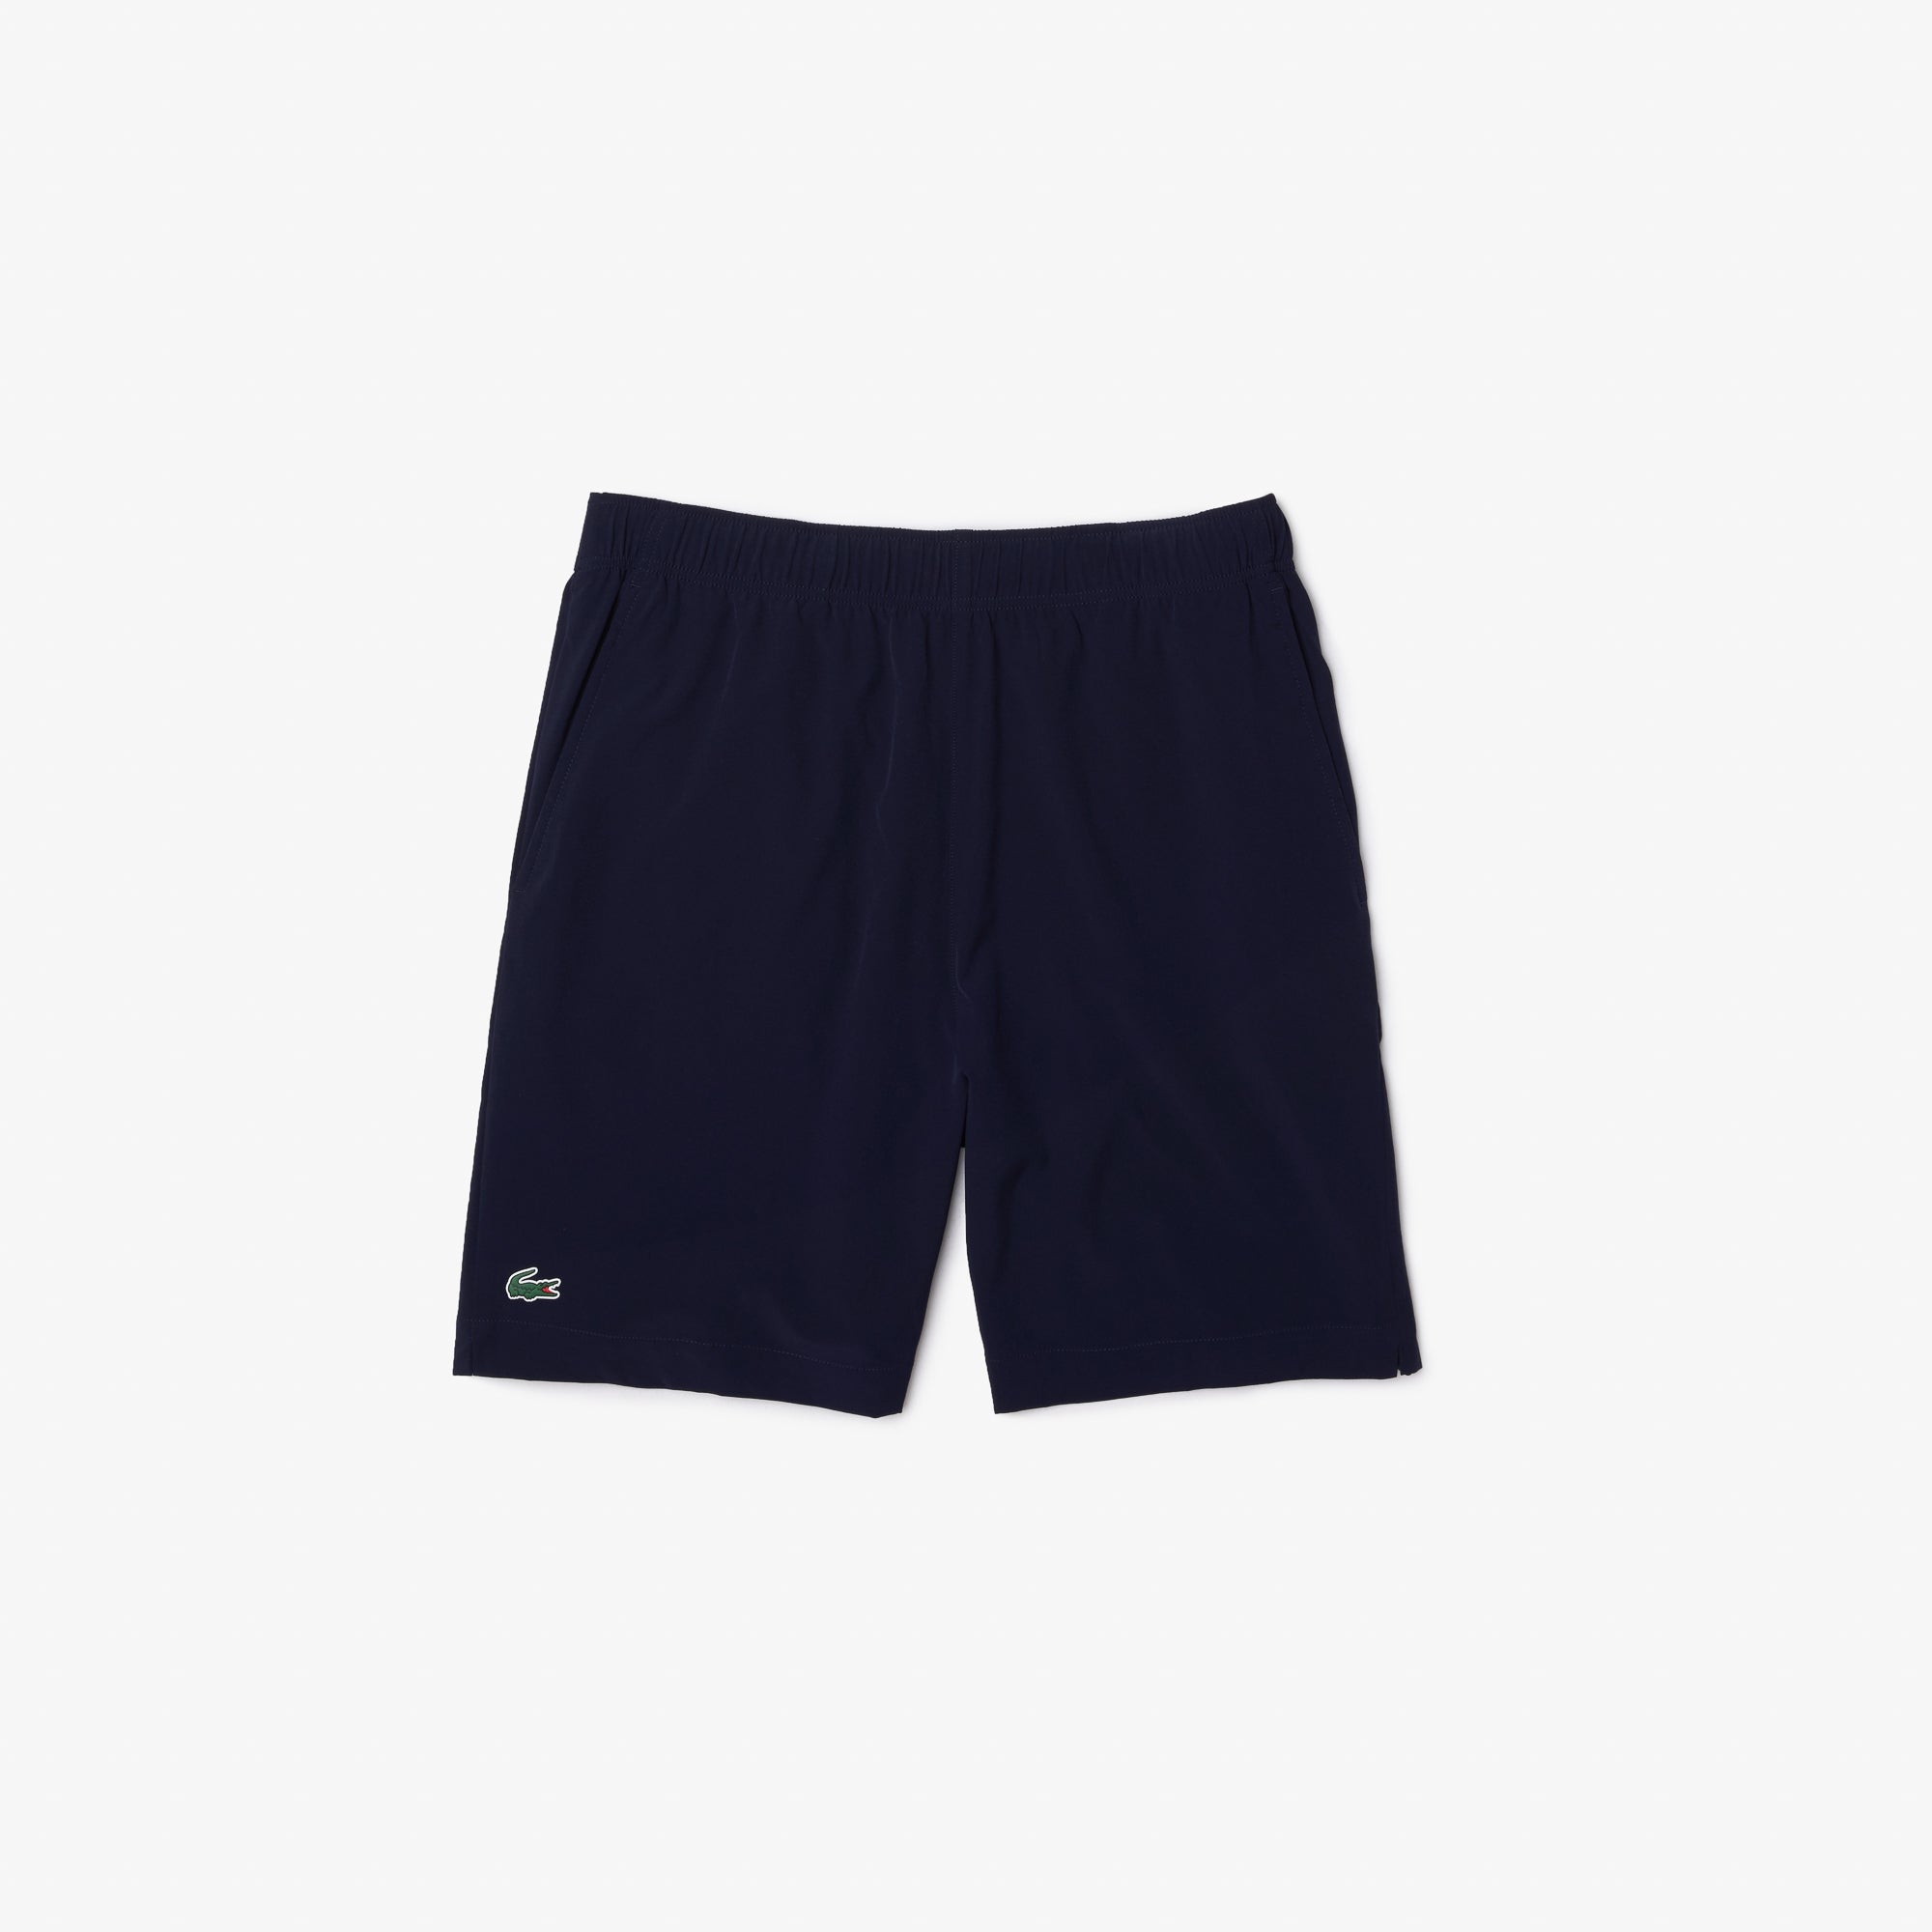 Lacoste Shorts (Navy) - M